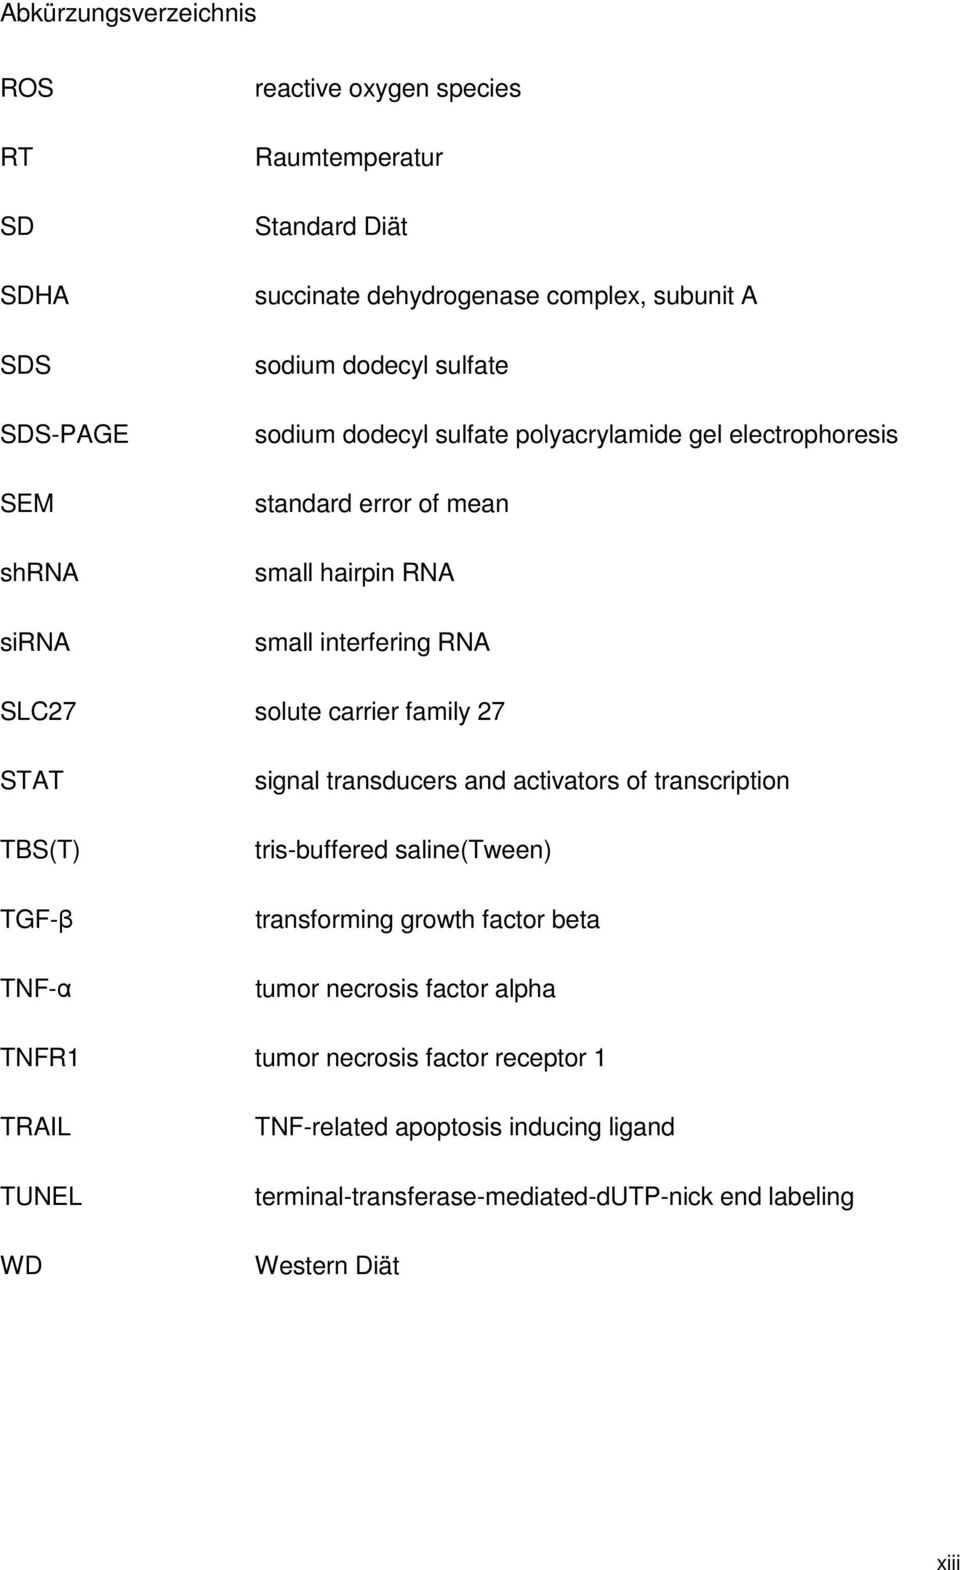 family 27 STAT TBS(T) TGF-β TNF-α signal transducers and activators of transcription tris-buffered saline(tween) transforming growth factor beta tumor necrosis